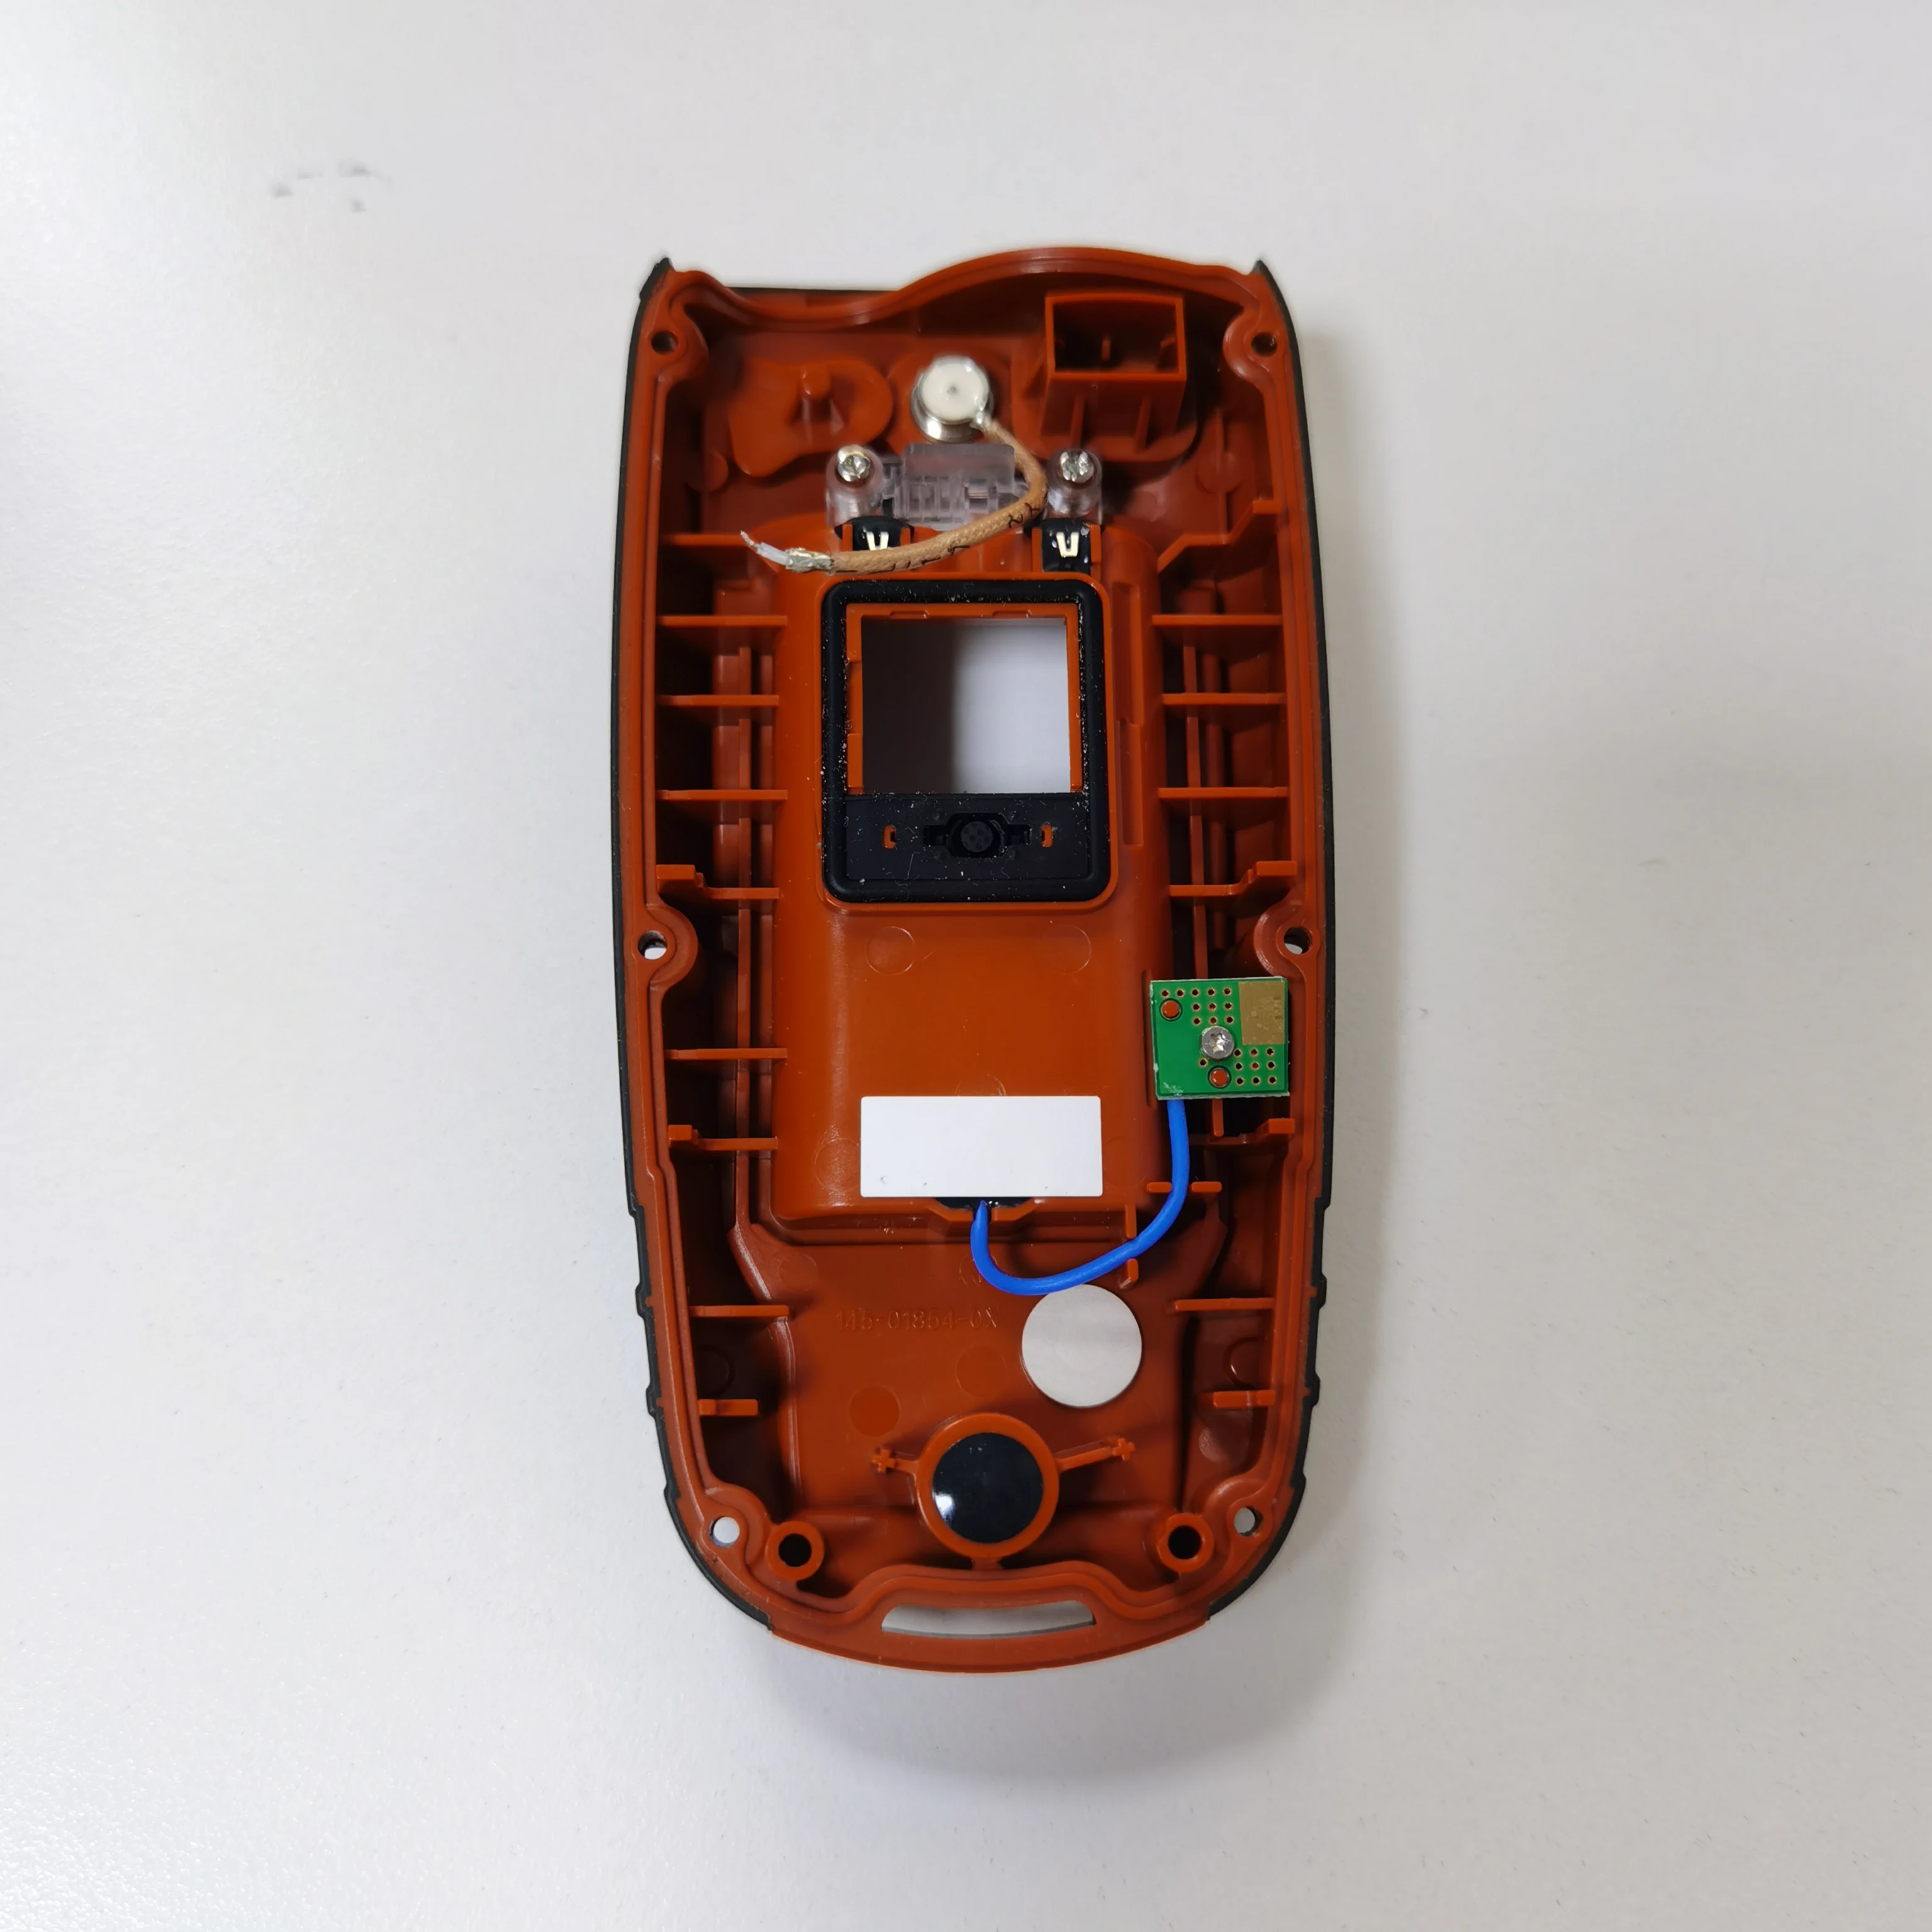 For Garmin GPSMAP 62 62sc 64 (64s 64st 64SJ) Handheld GPS housing shell Repair Replacement parts - AliExpress Mobile